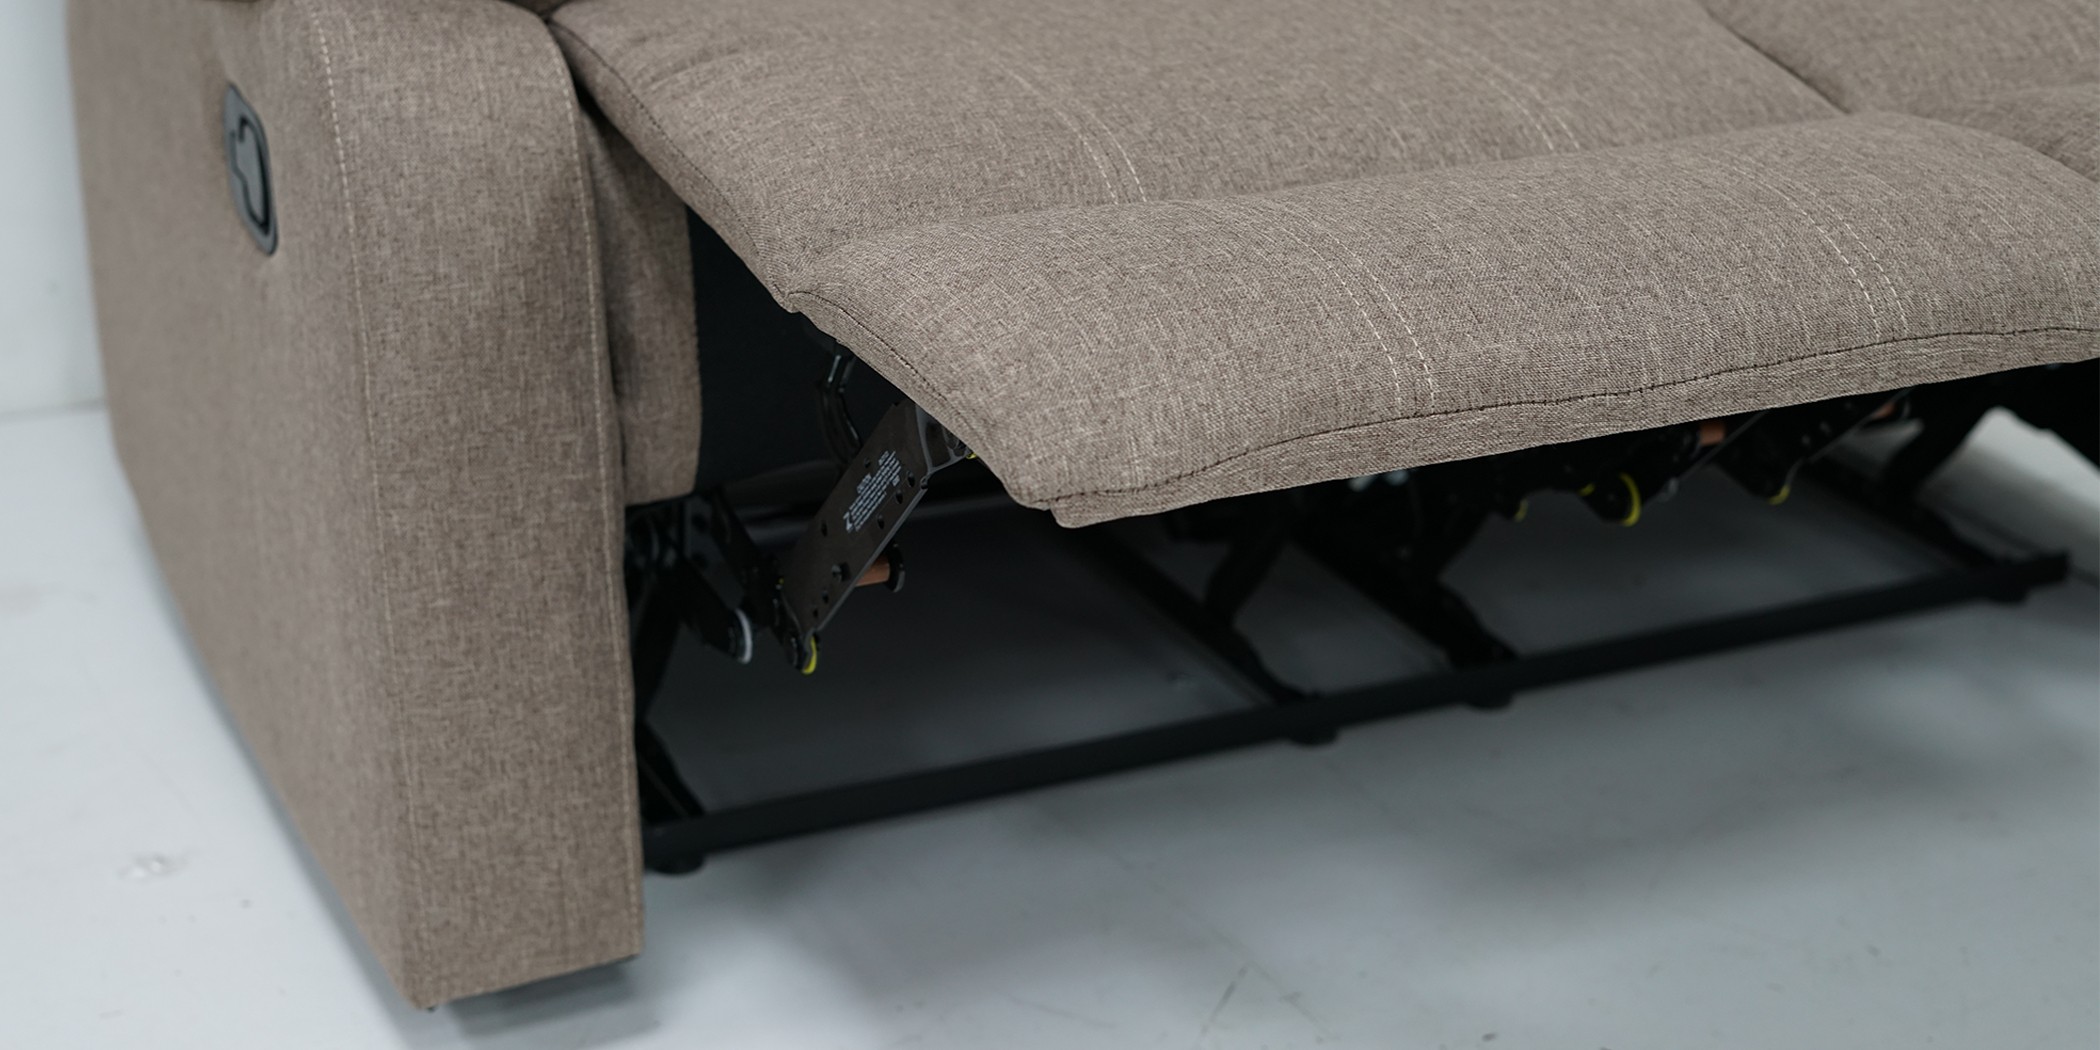 Tavana Recliner Sofa 3+2 Camel Fabric